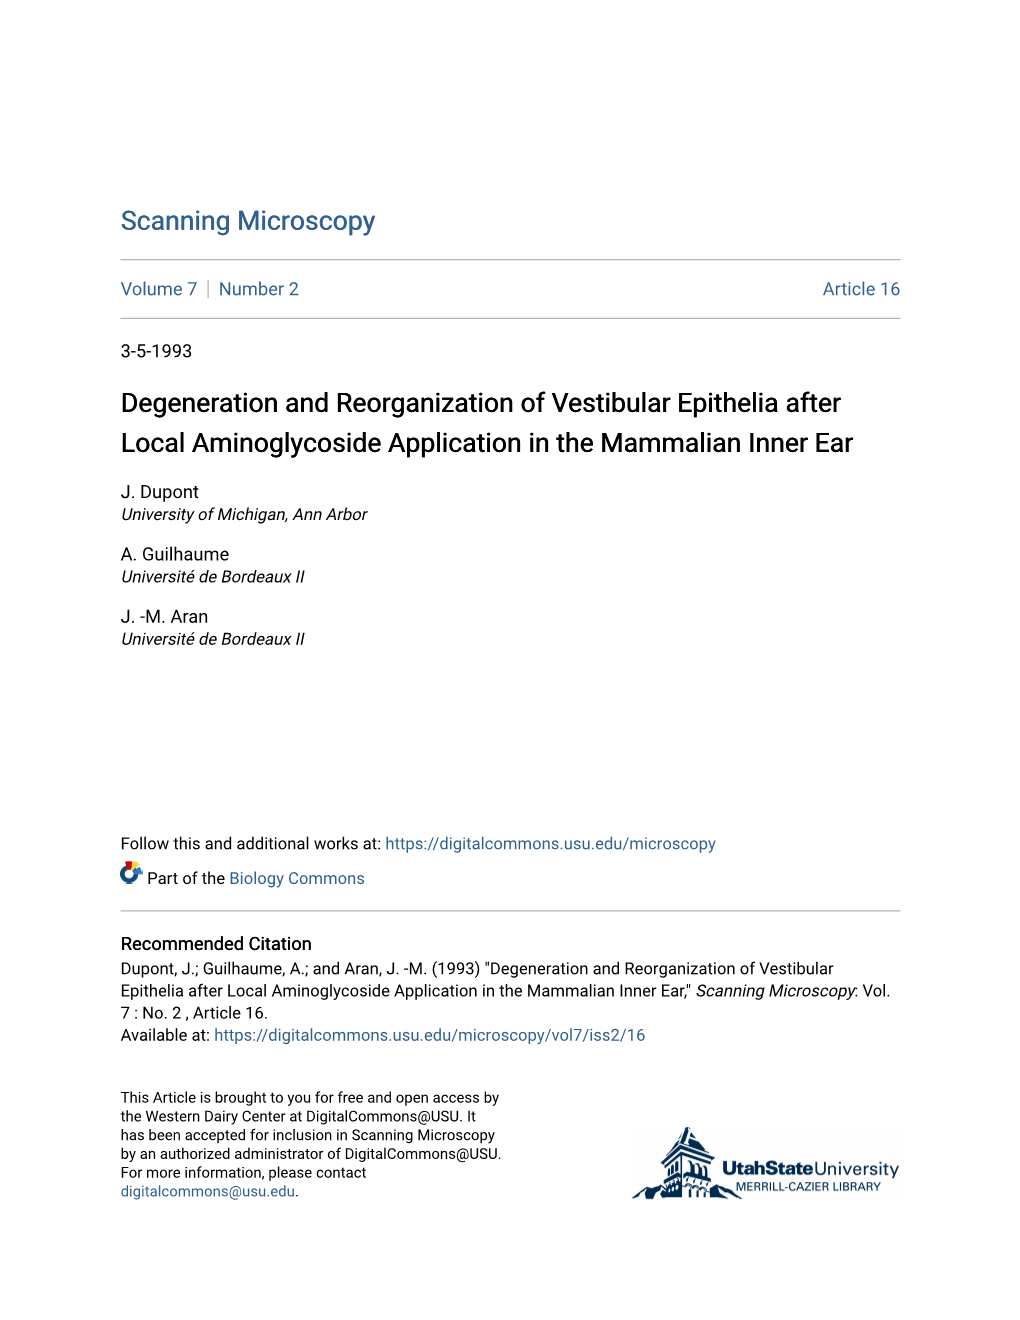 Degeneration and Reorganization of Vestibular Epithelia After Local Aminoglycoside Application in the Mammalian Inner Ear